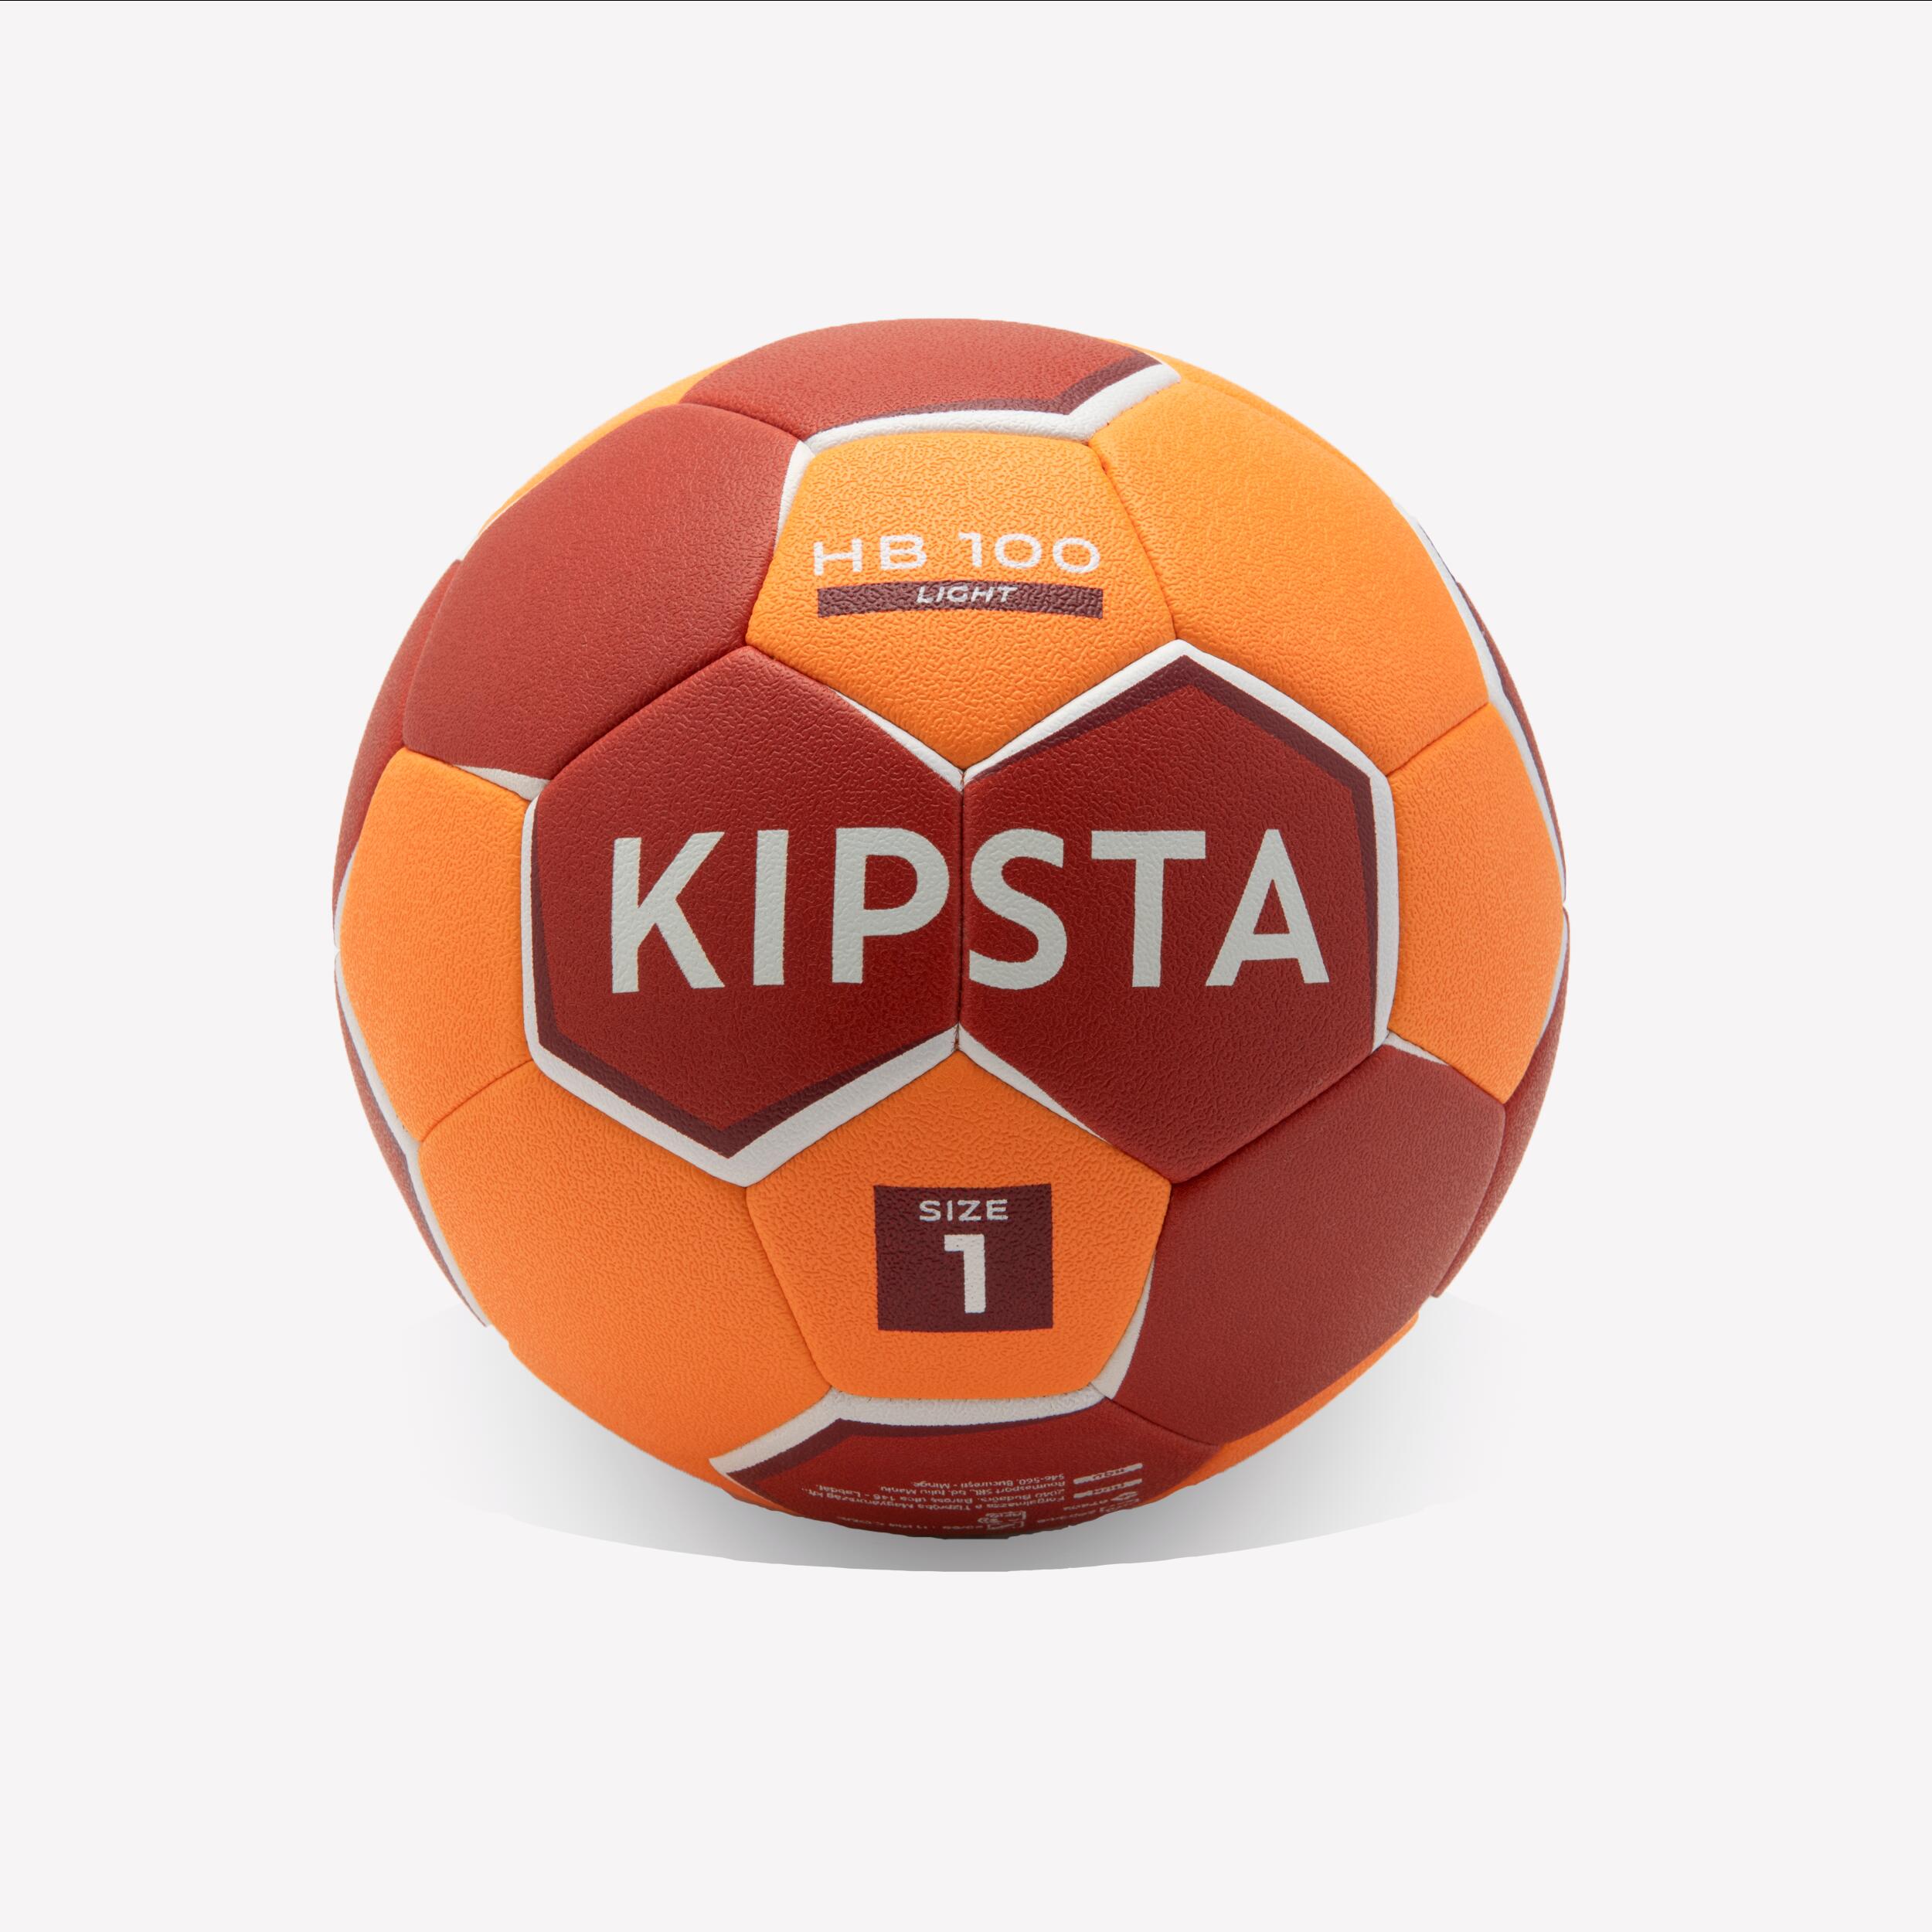 KIPSTA Ballon De Handball Taille 1 - H100 Light Orange